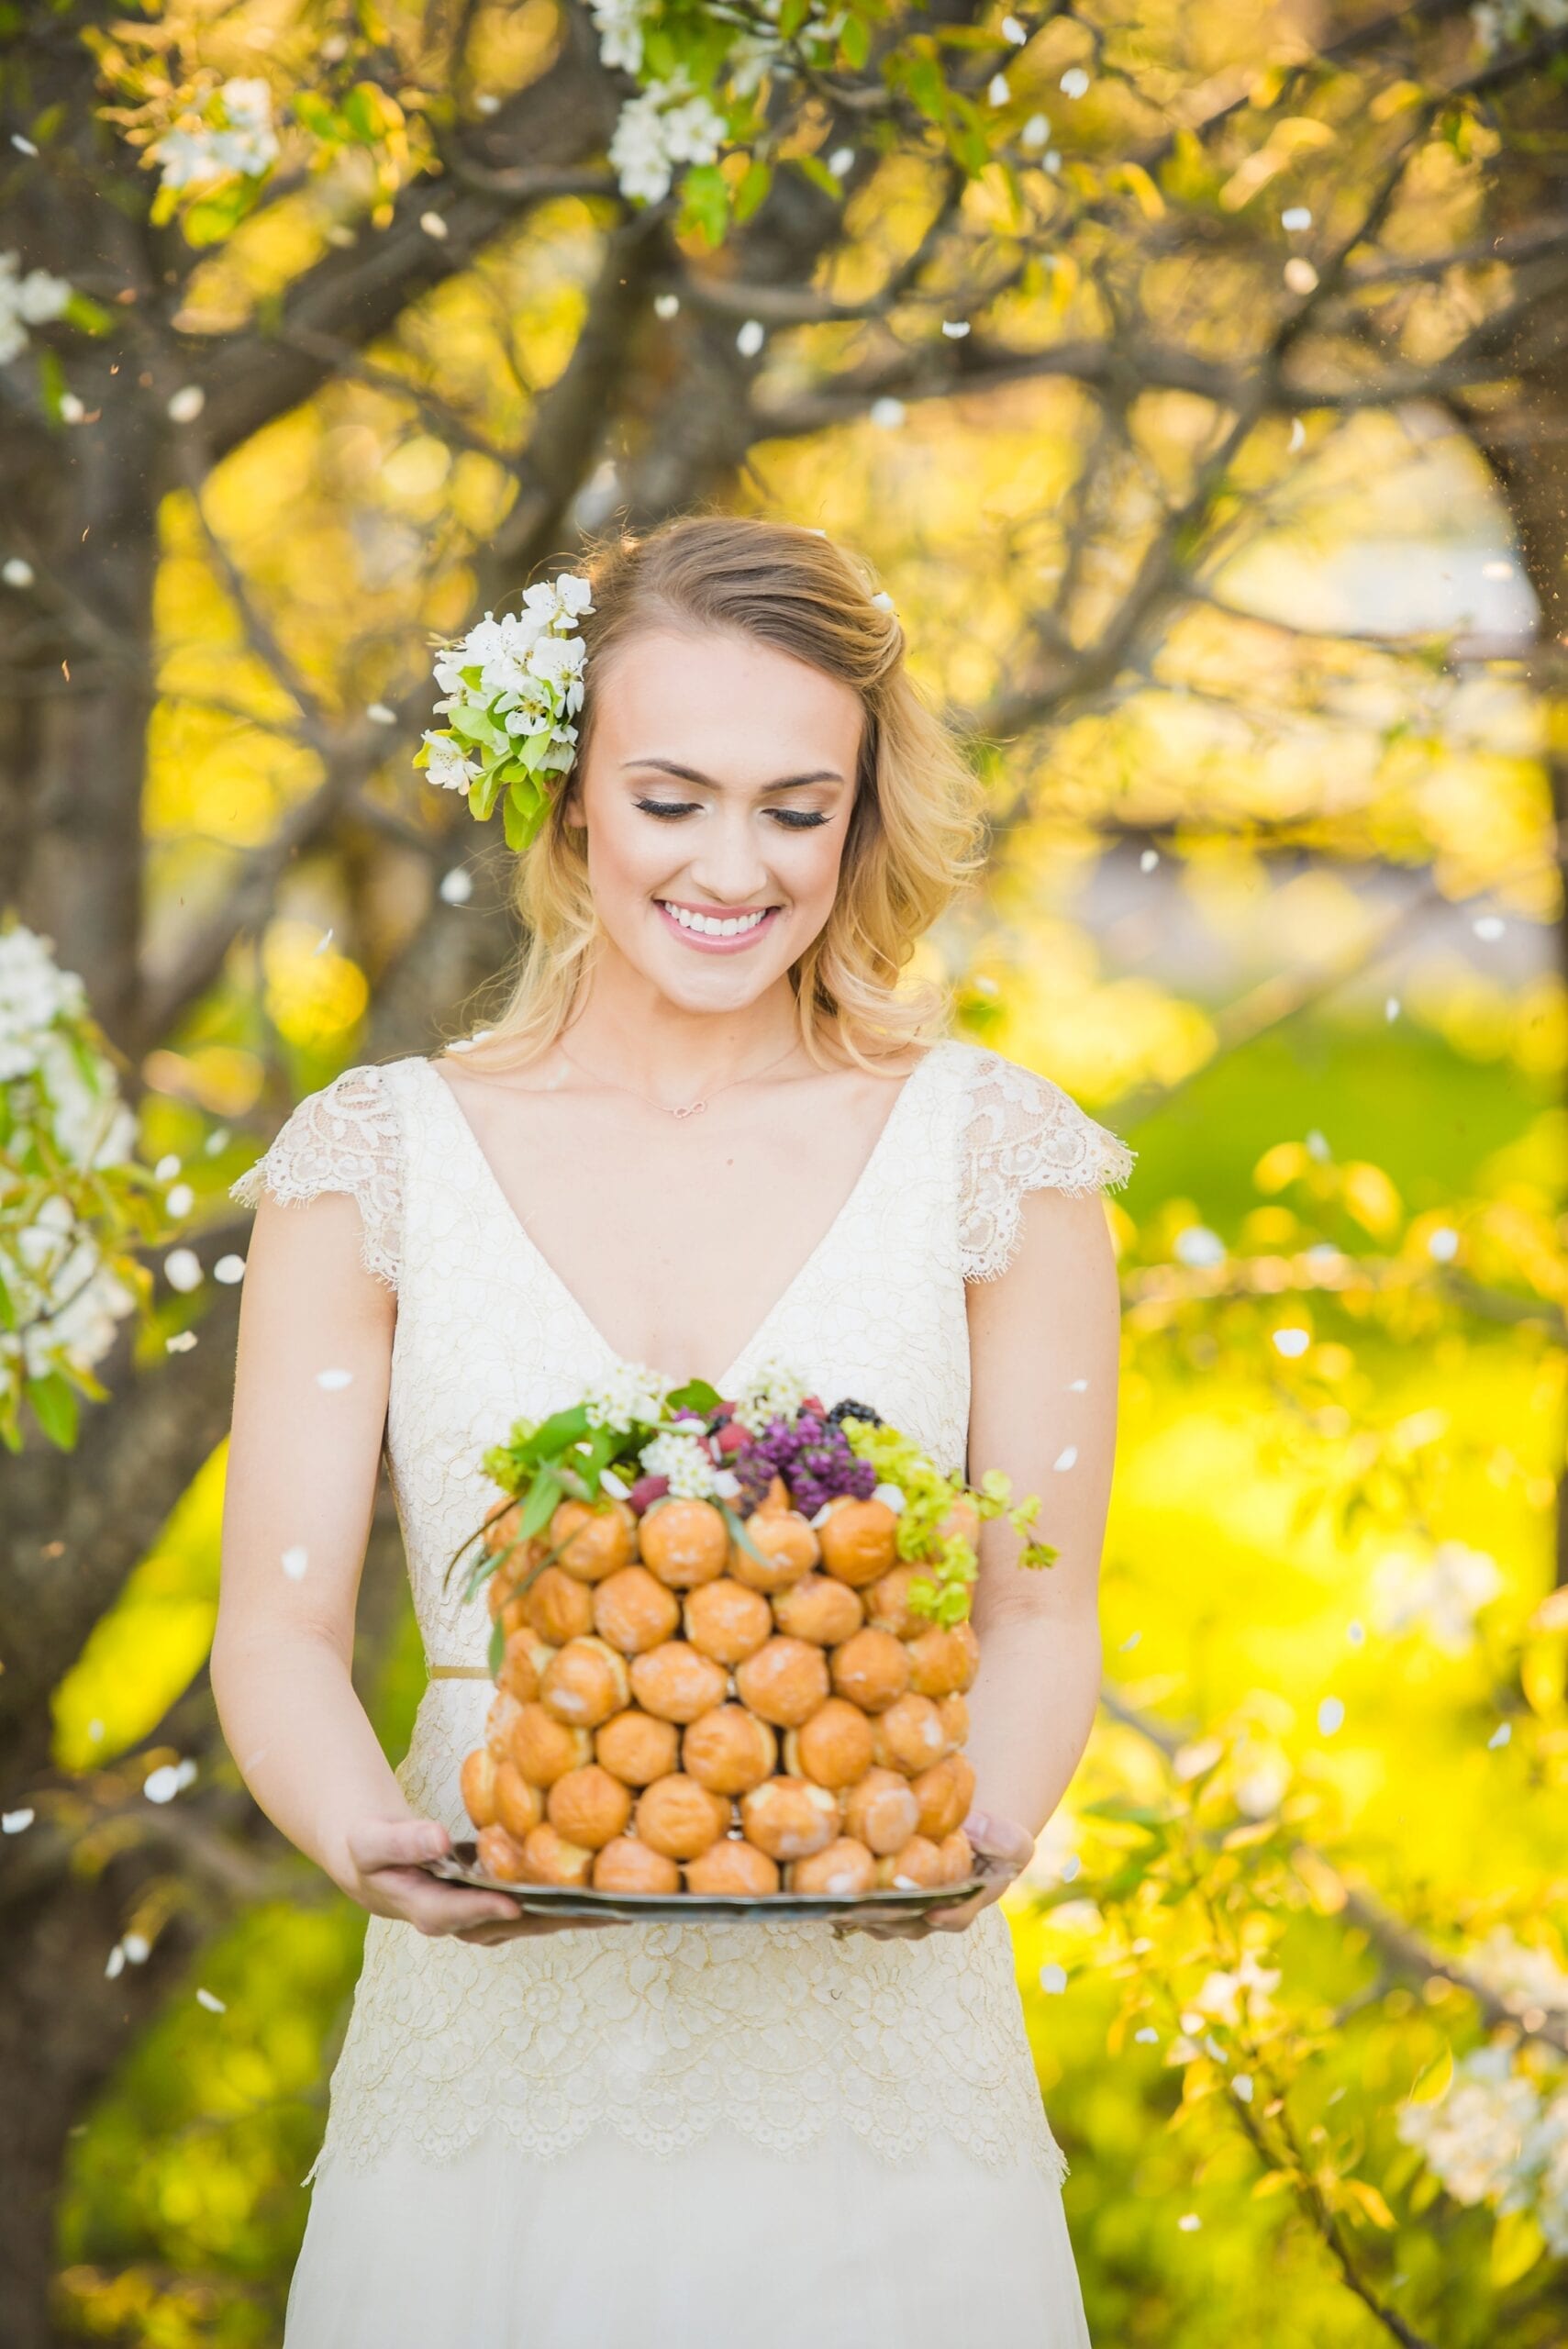 A Spring DIY Wedding Cake by Michelle & Logan Photo+Films